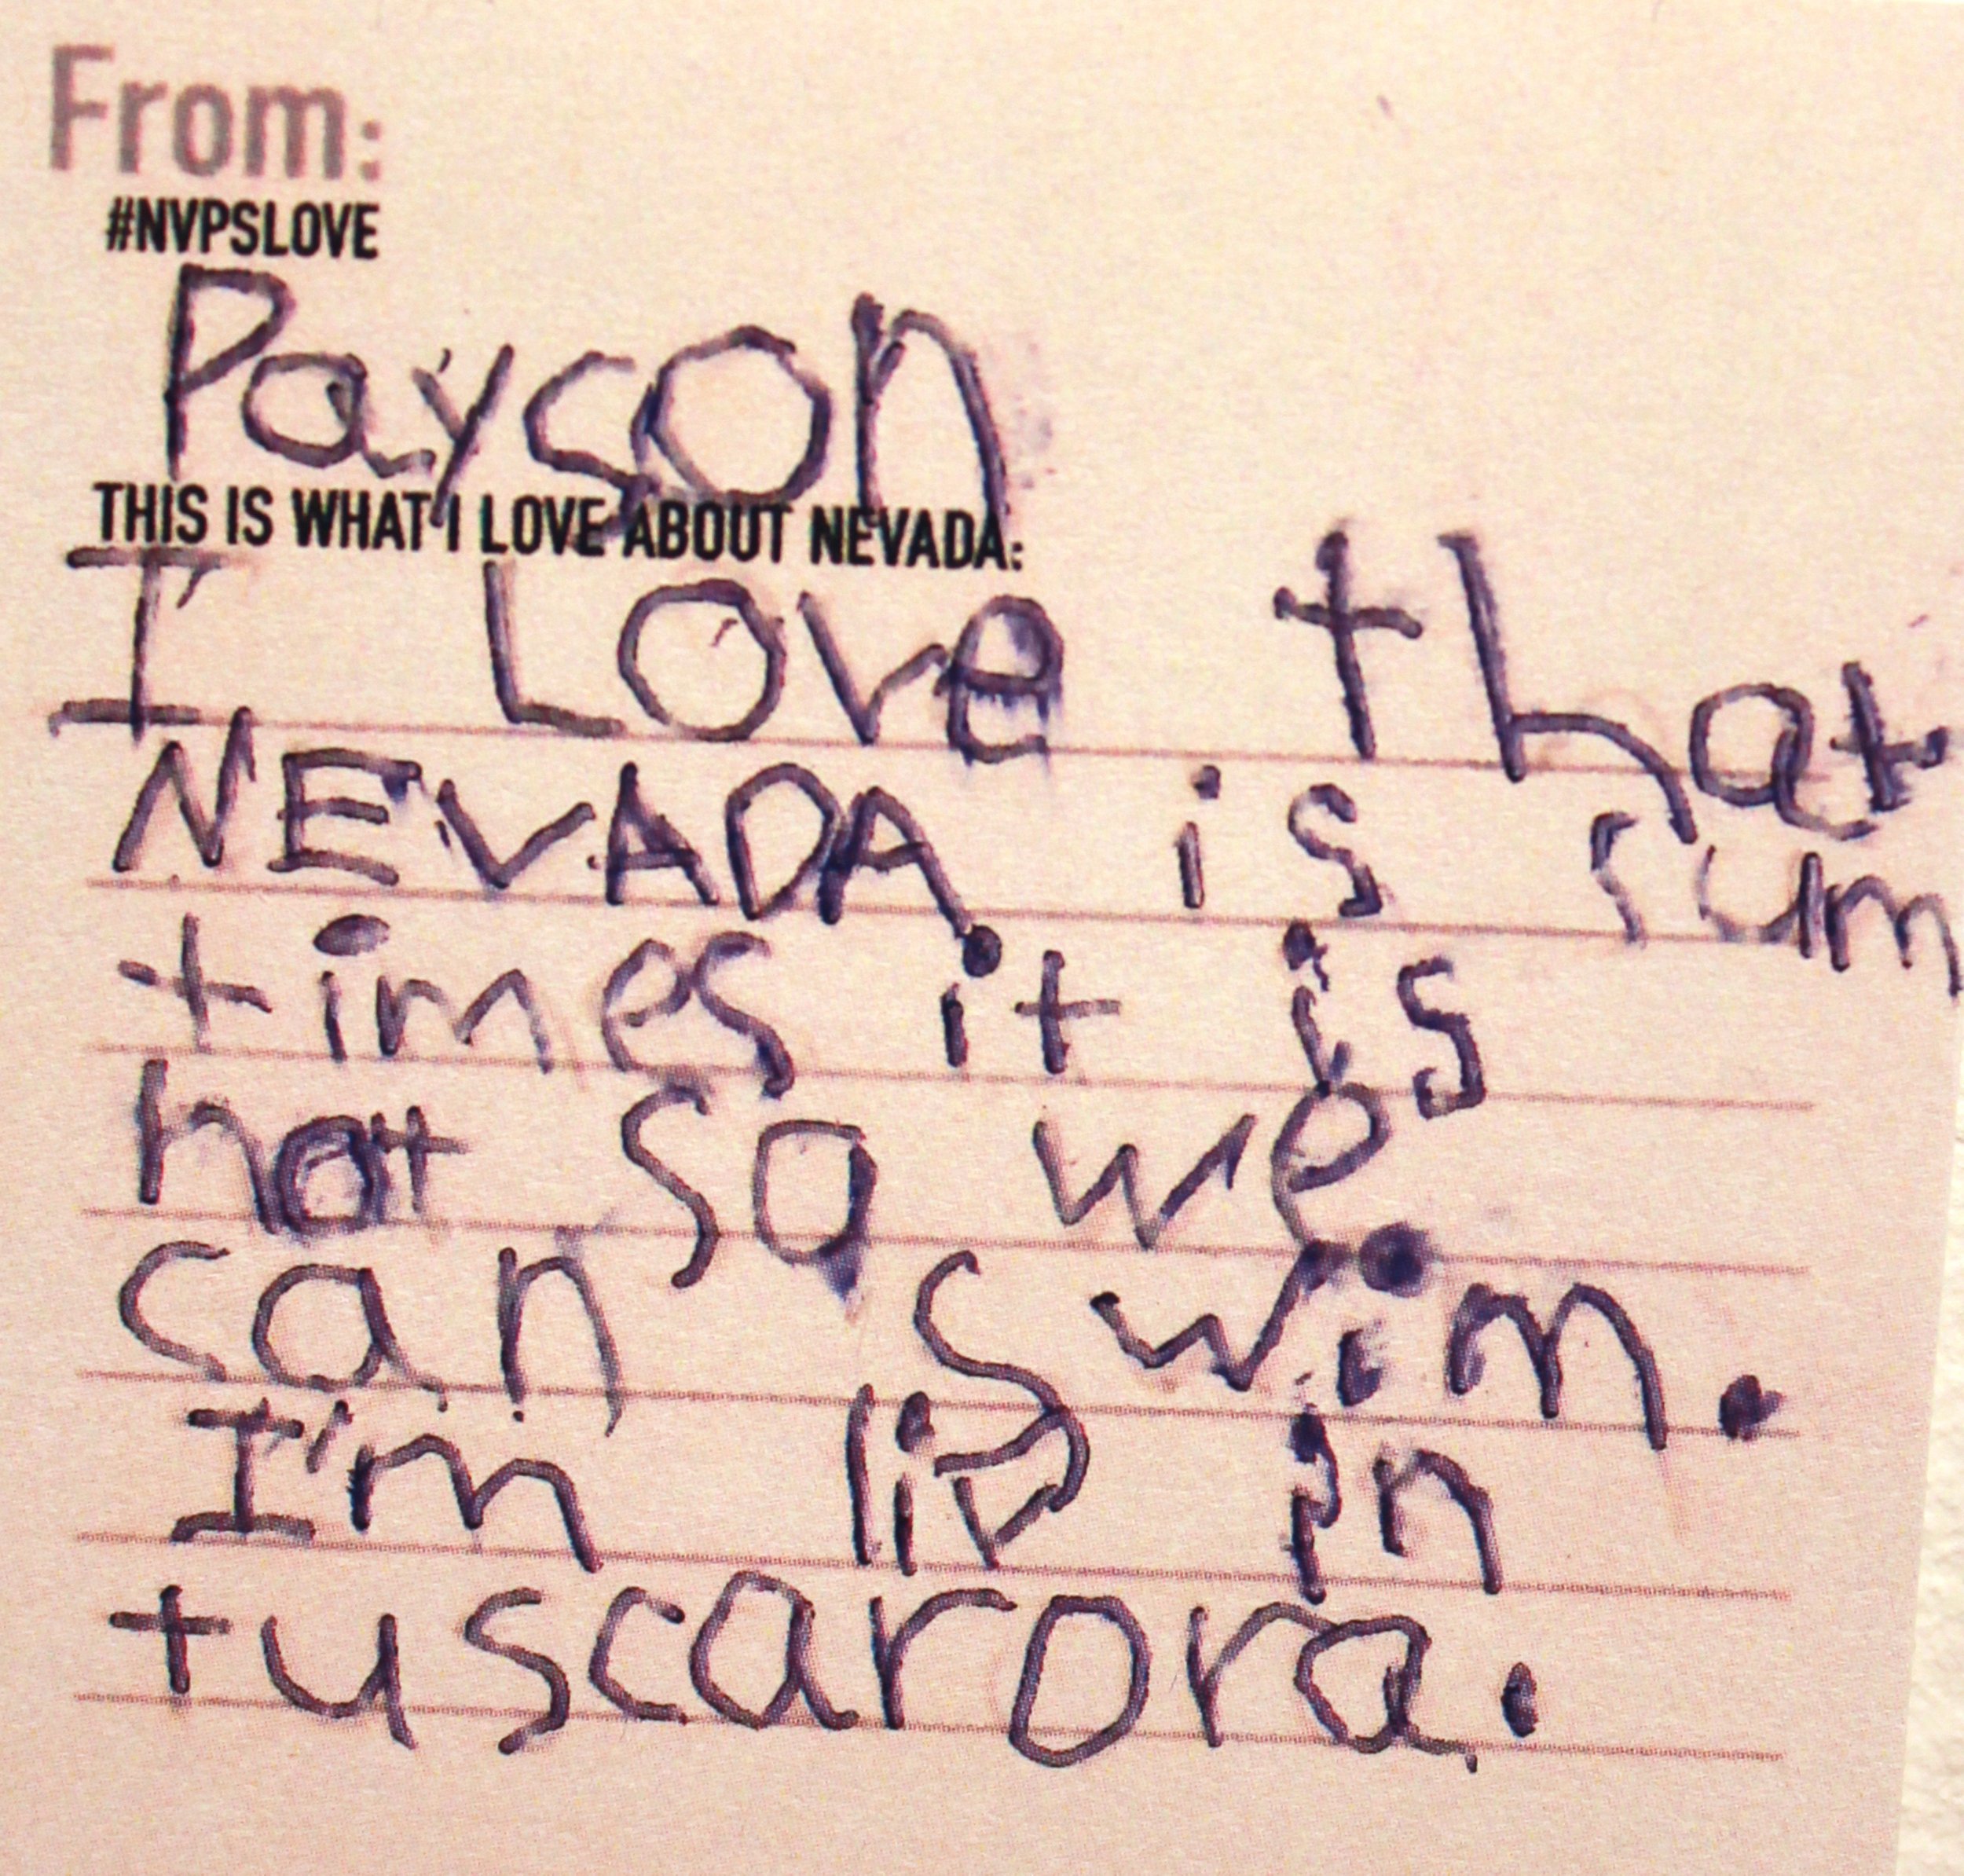 15_Nevada P.S. I Love You_message.jpg